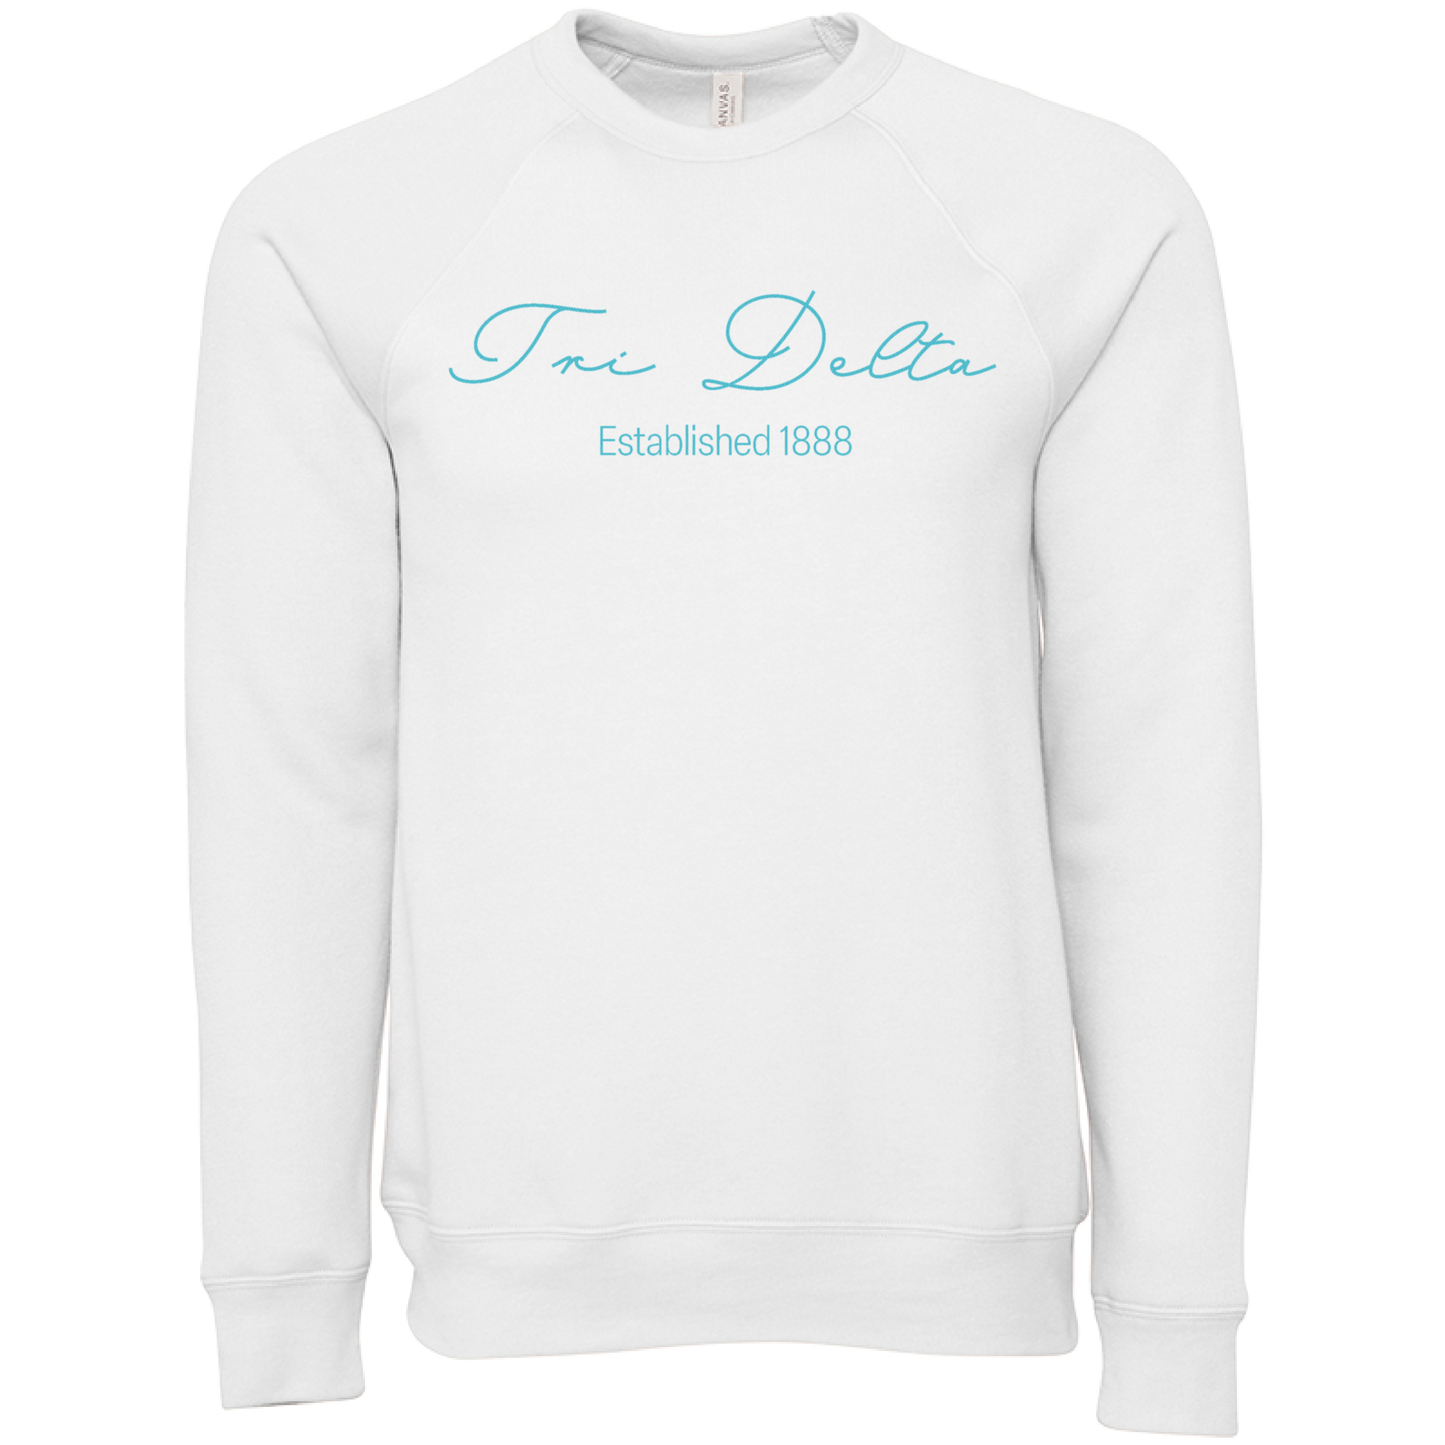 Delta Delta Delta Embroidered Scripted Name Crewneck Sweatshirts